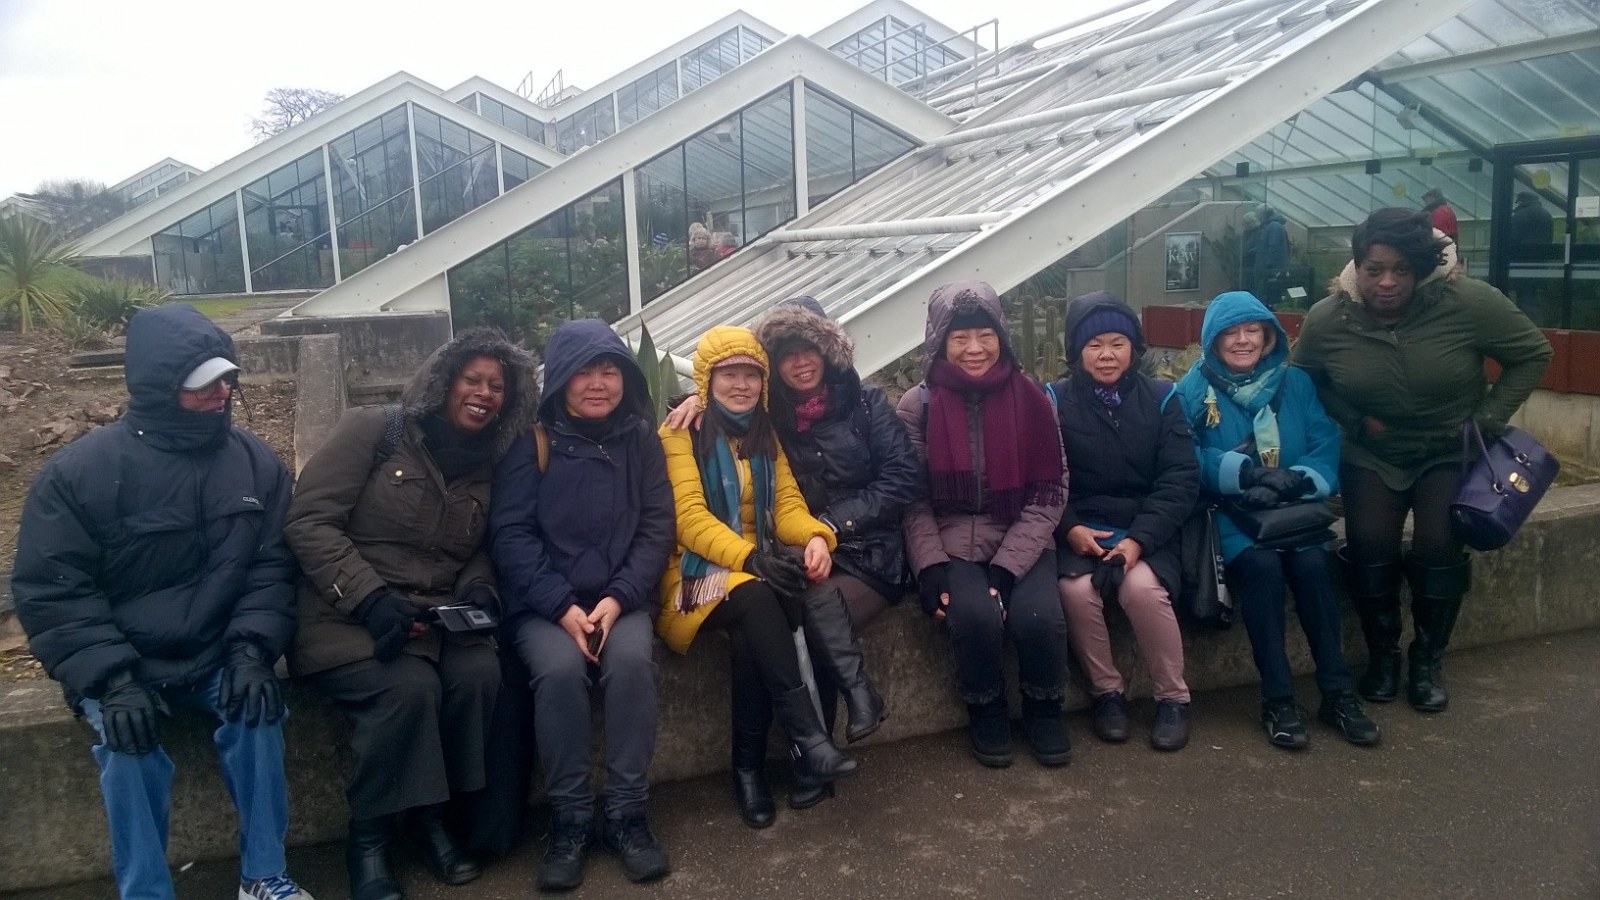 Aylesbury residents visit Kew Gardens Picture 1